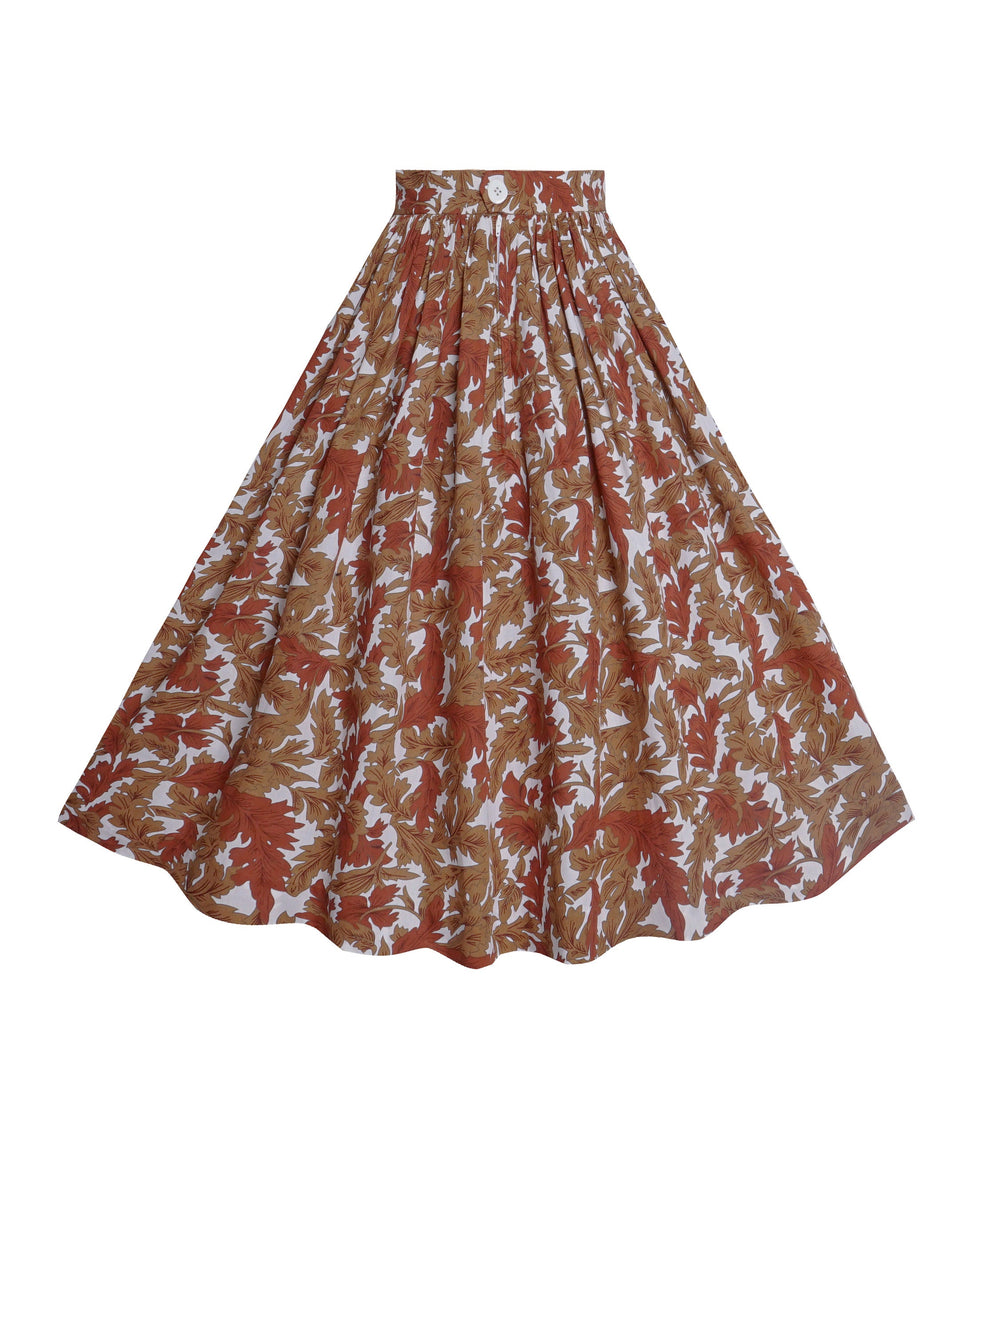 RTS - Size S - Lola Skirt "Autumn Florets"